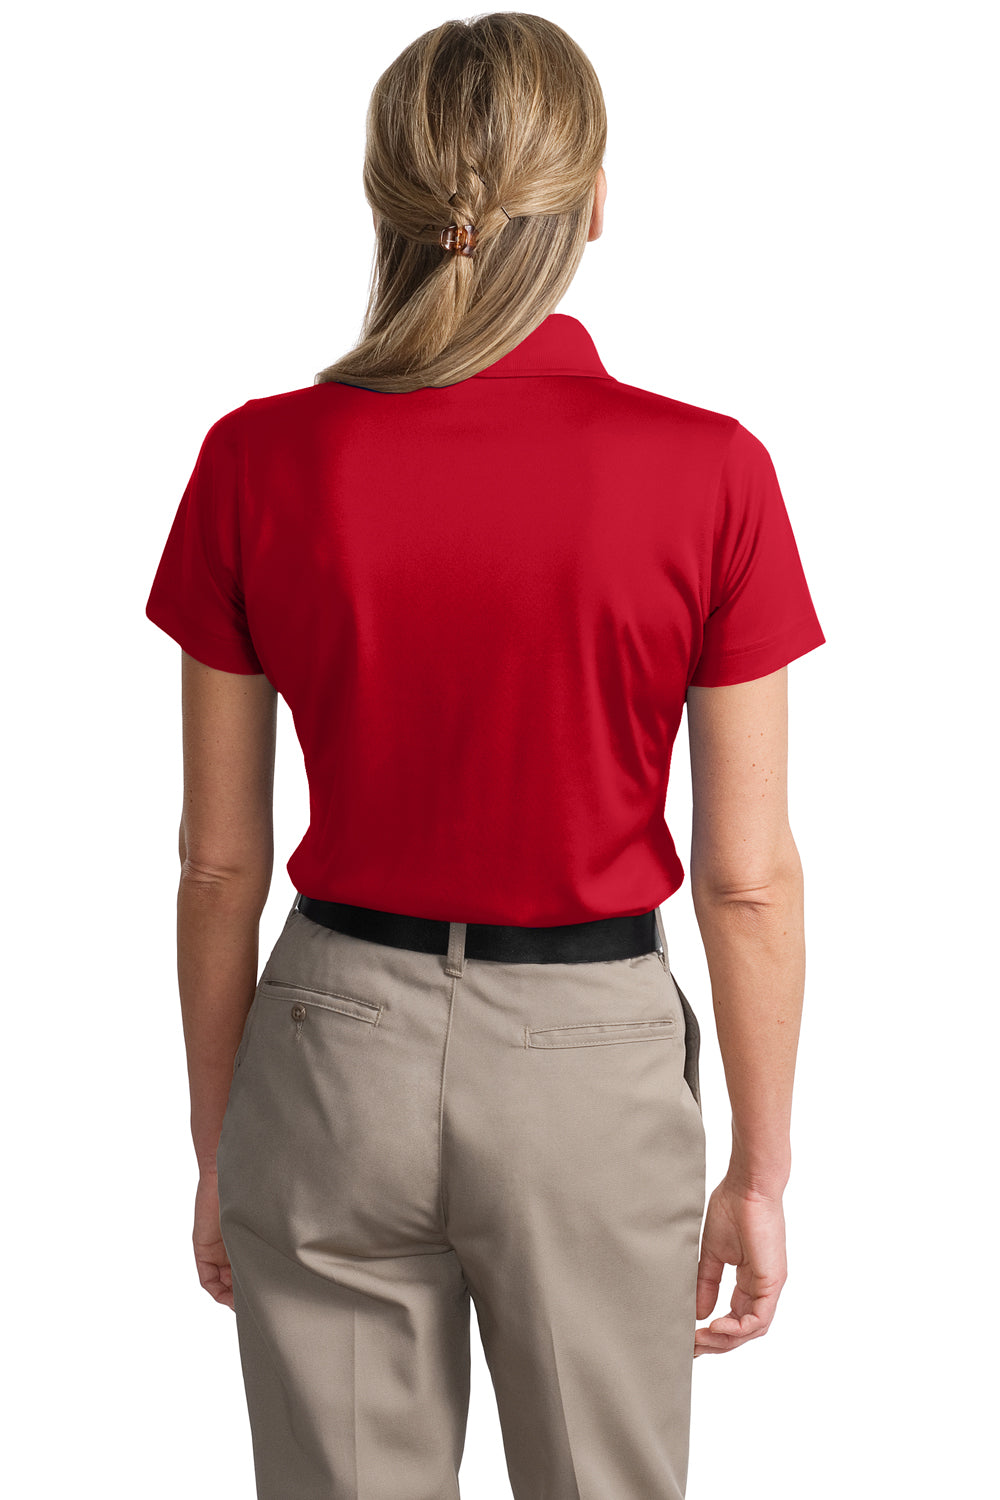 CornerStone CS413 Womens Select Moisture Wicking Short Sleeve Polo Shirt Red Back